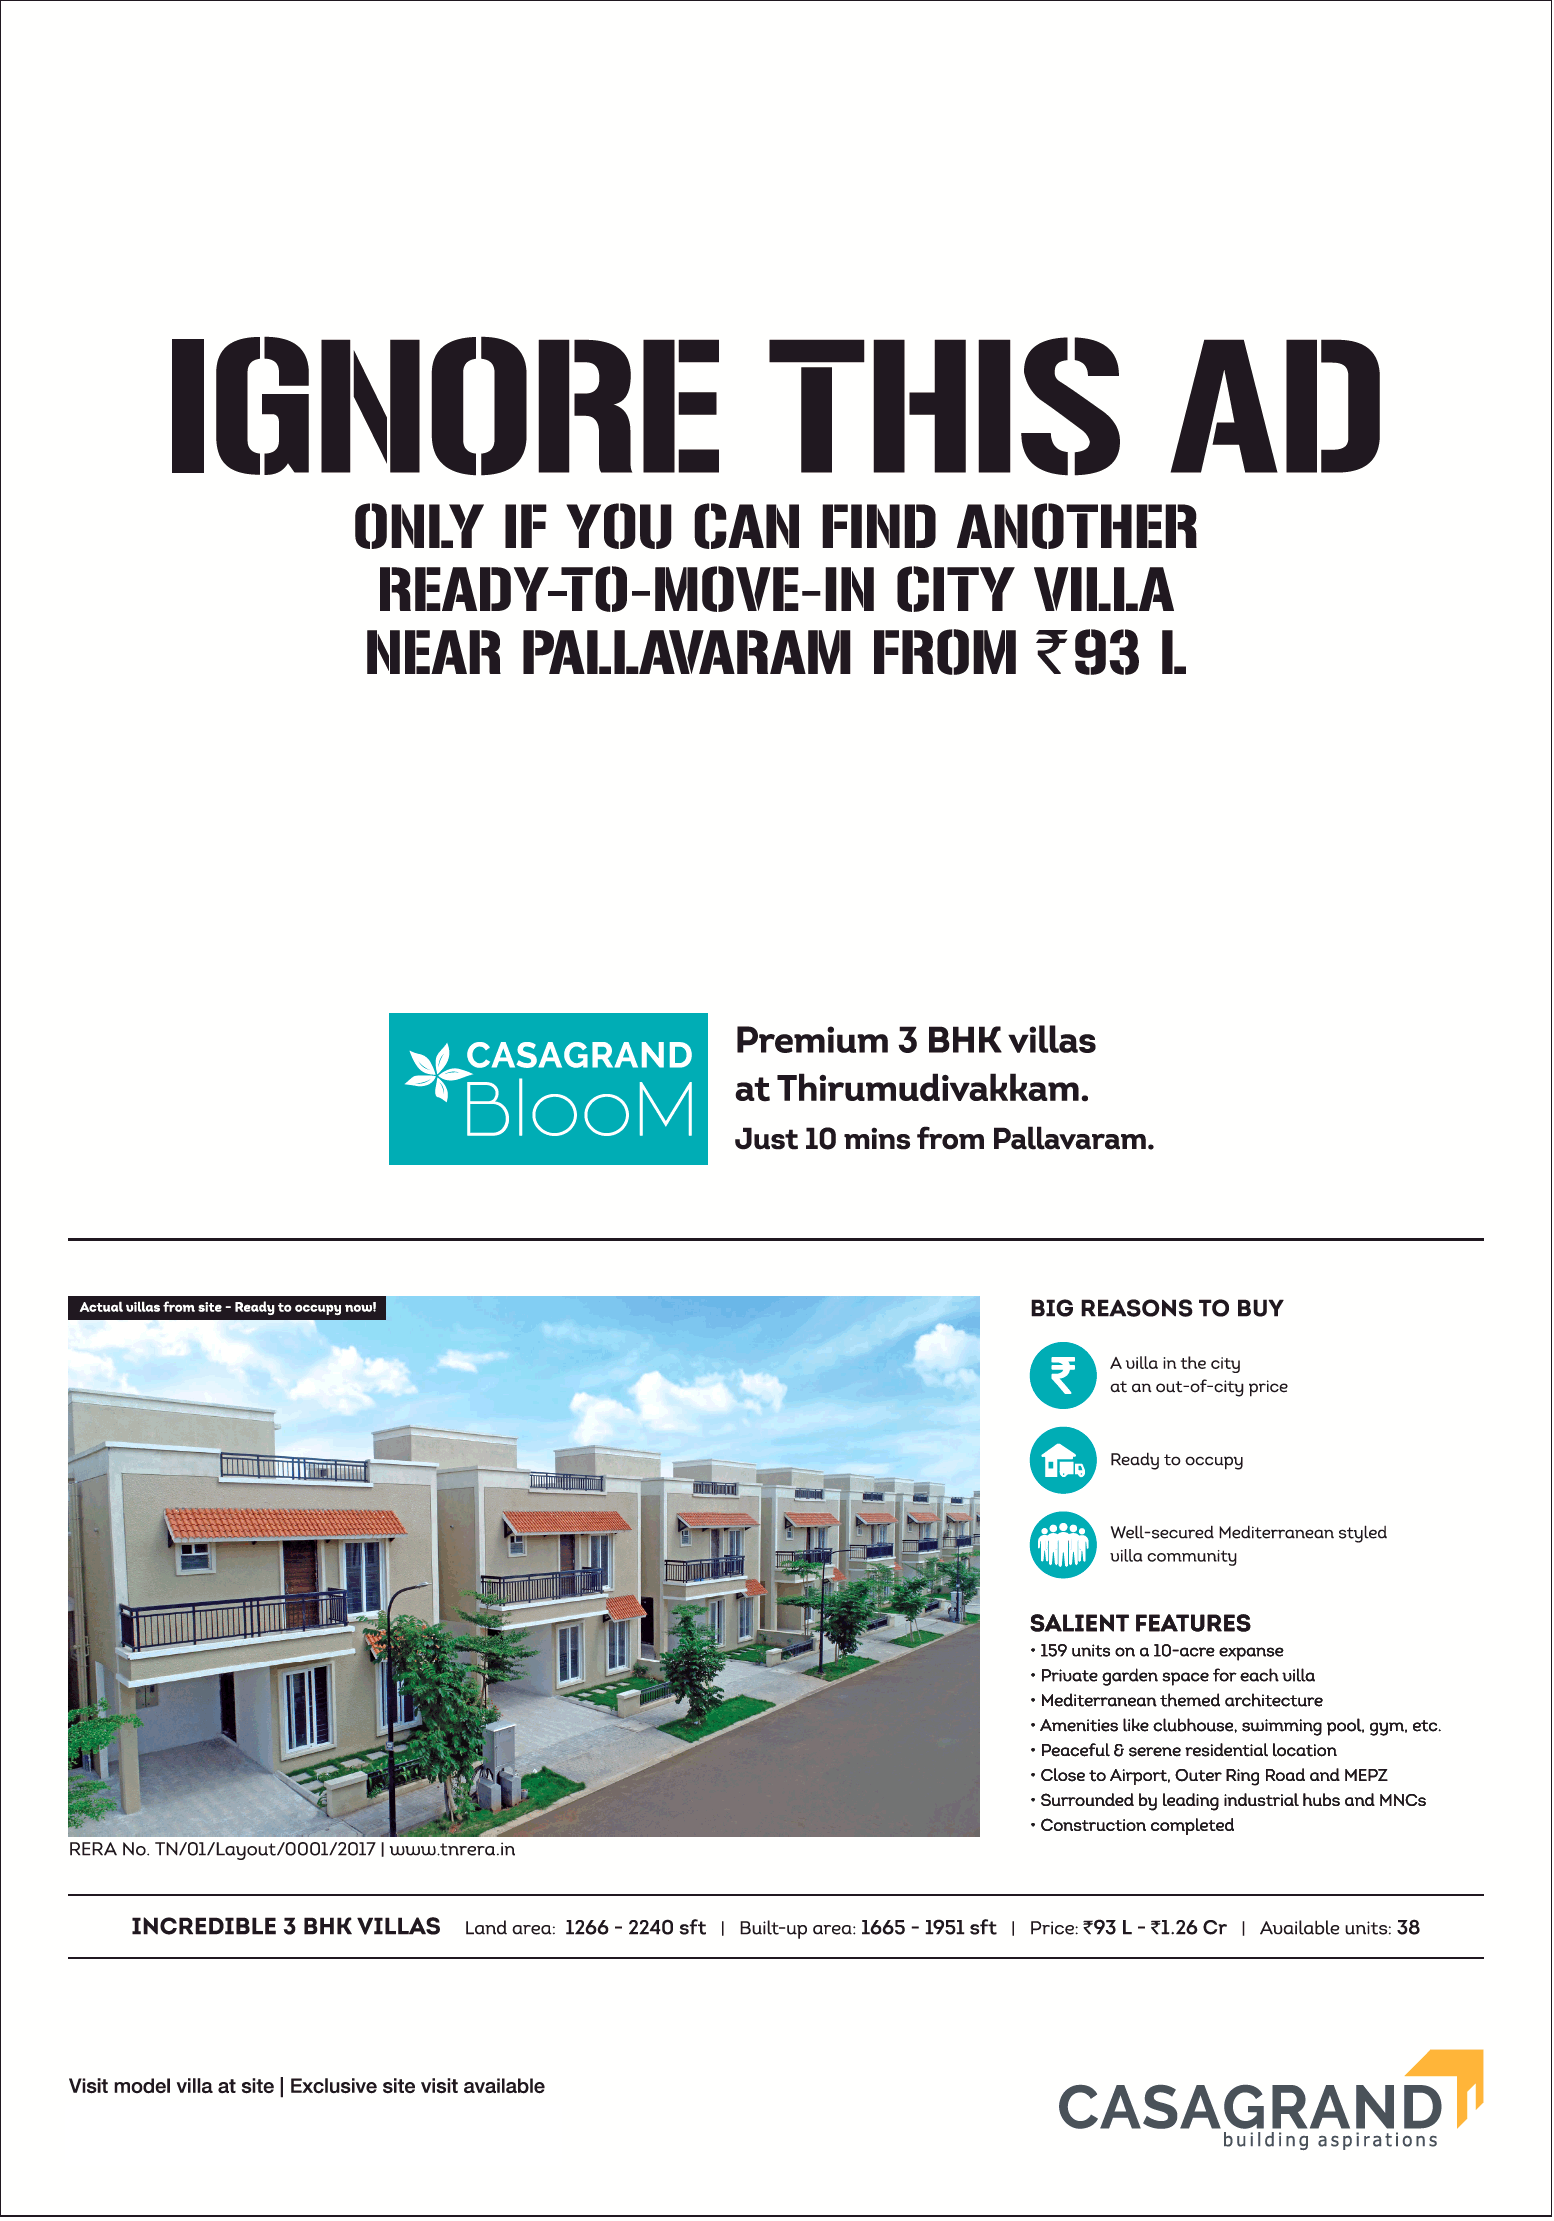 Premium 3 BHK villas Rs 93 Lac at Casagrand Bloom in Chennai